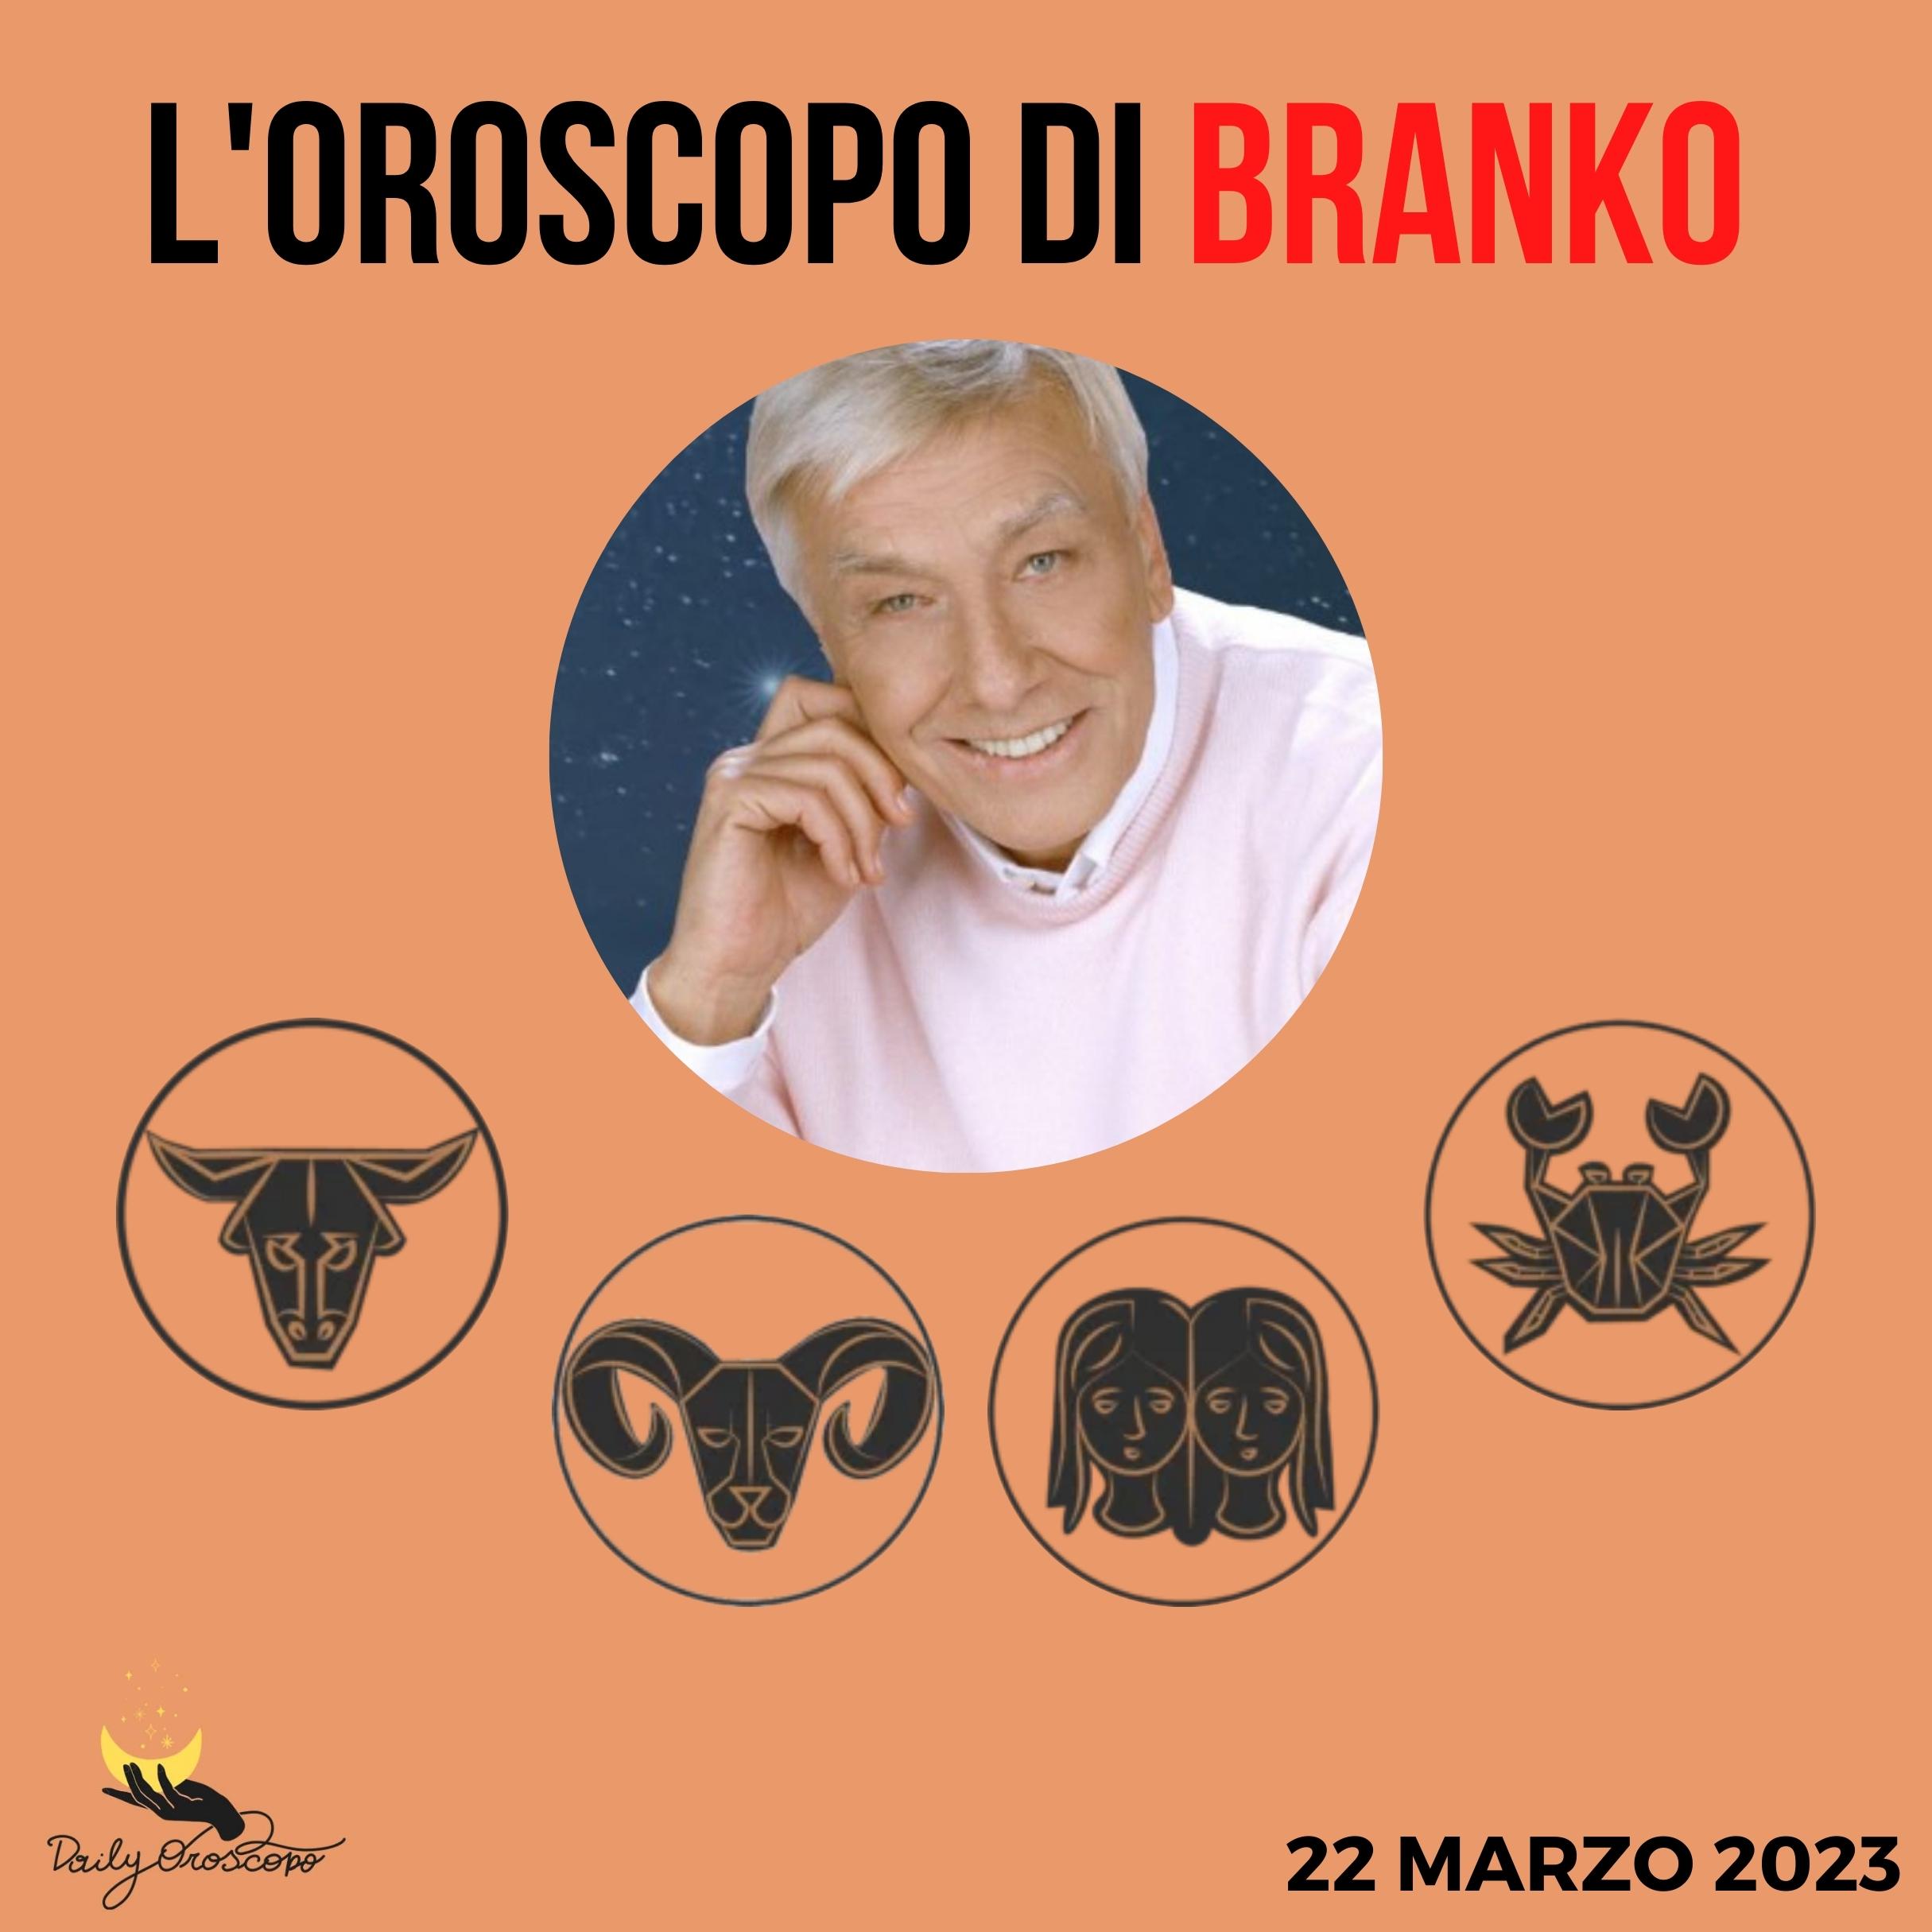 Oroscopo Branko oggi 22 marzo 2023 Toro Ariete Gemelli Cancro